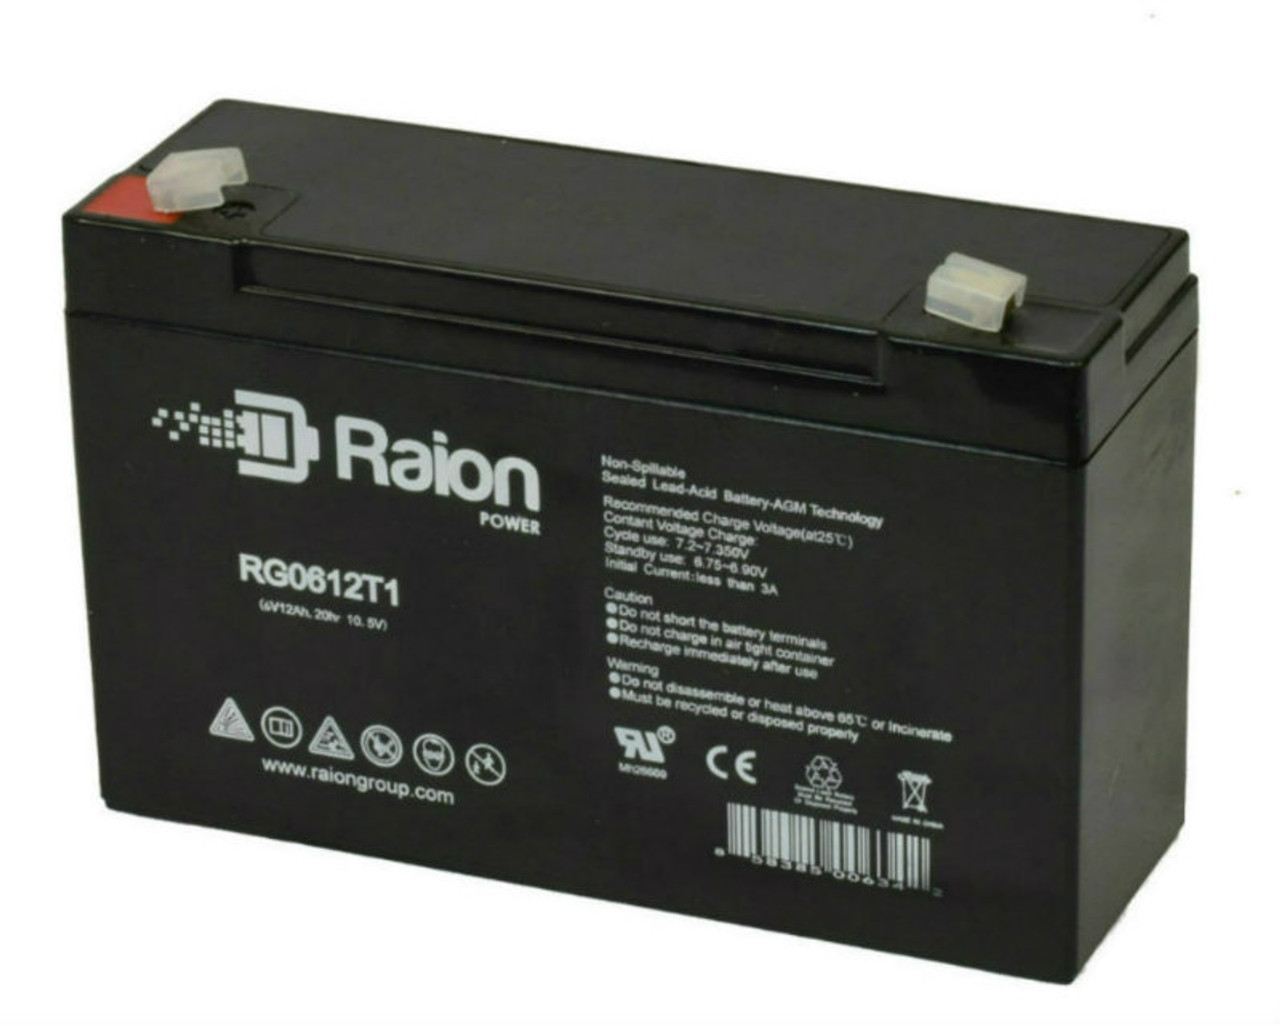 Raion Power RG06120T1 Replacement Battery for Rhino SLA10-6